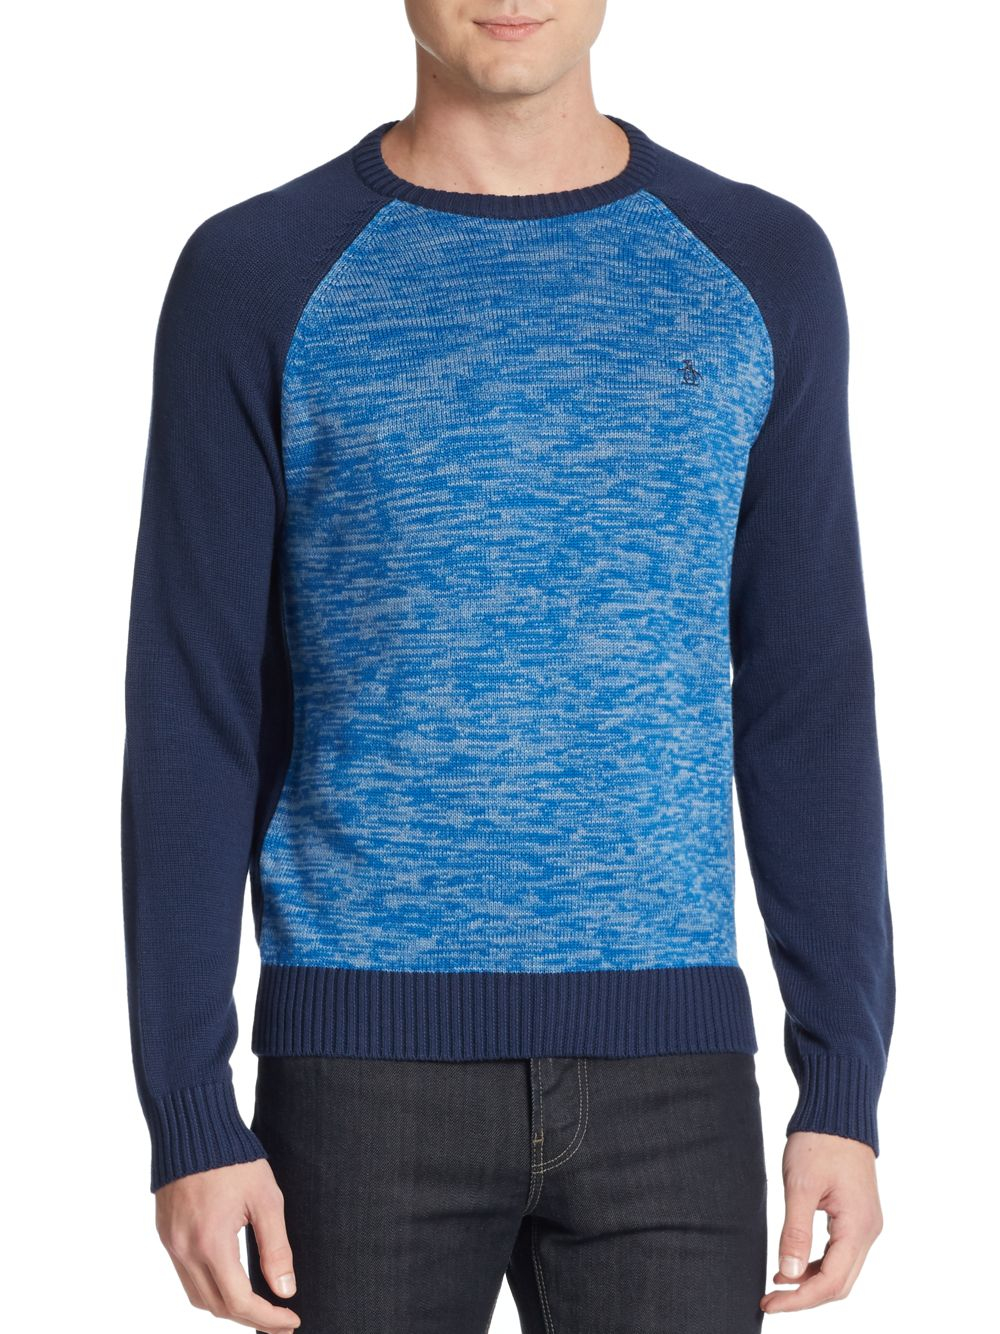 Lyst - Original penguin Colorblock Raglan Sleeve Sweater in Blue for Men